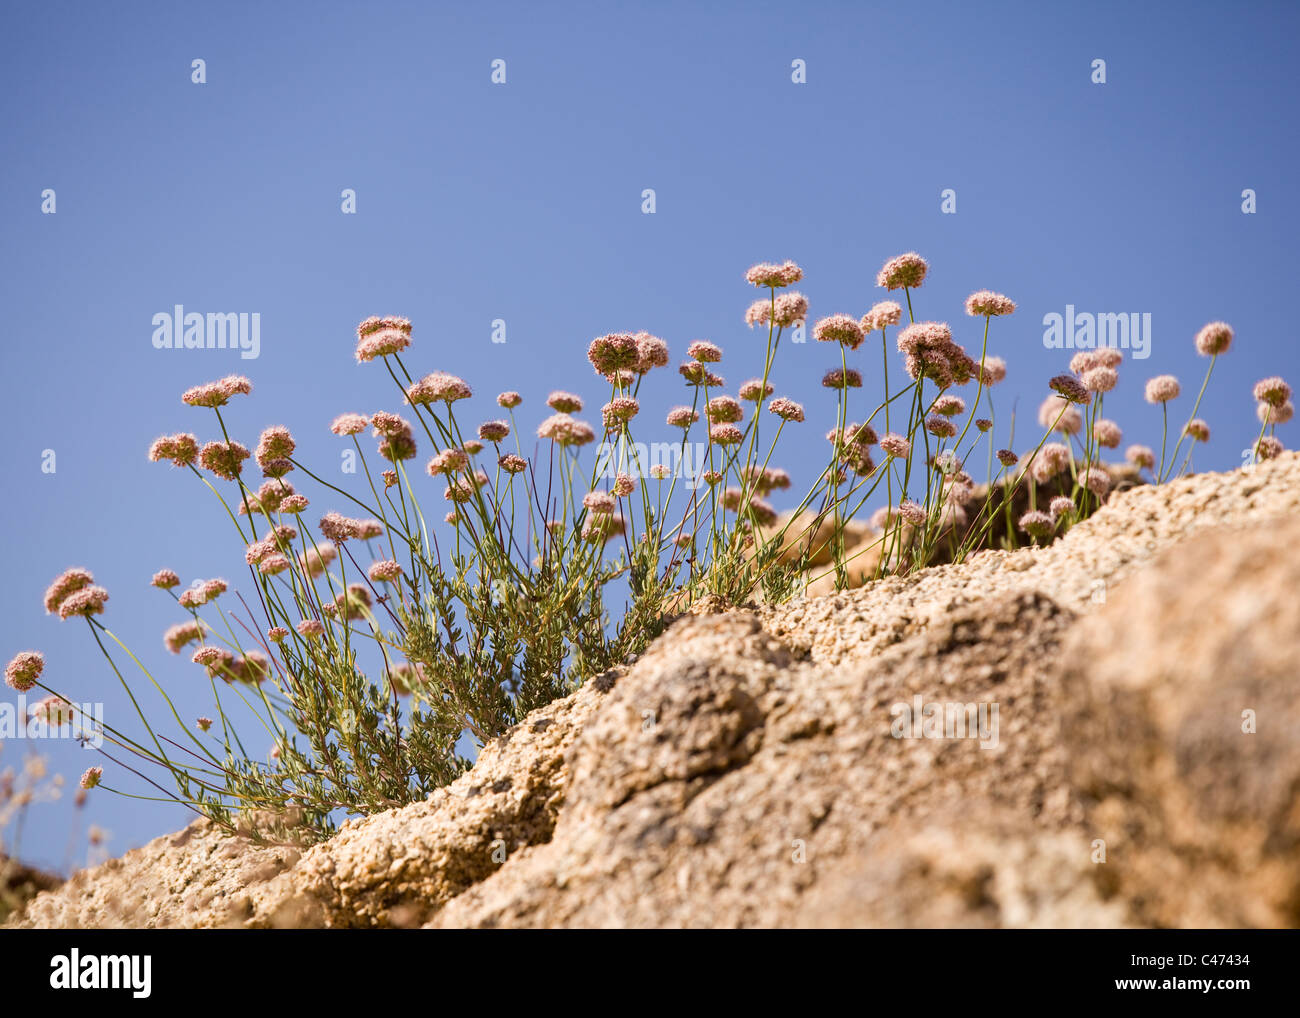 California buckwheat (Eriogonum fasciculatum) growing in the Mojave desert - California, USA Stock Photo